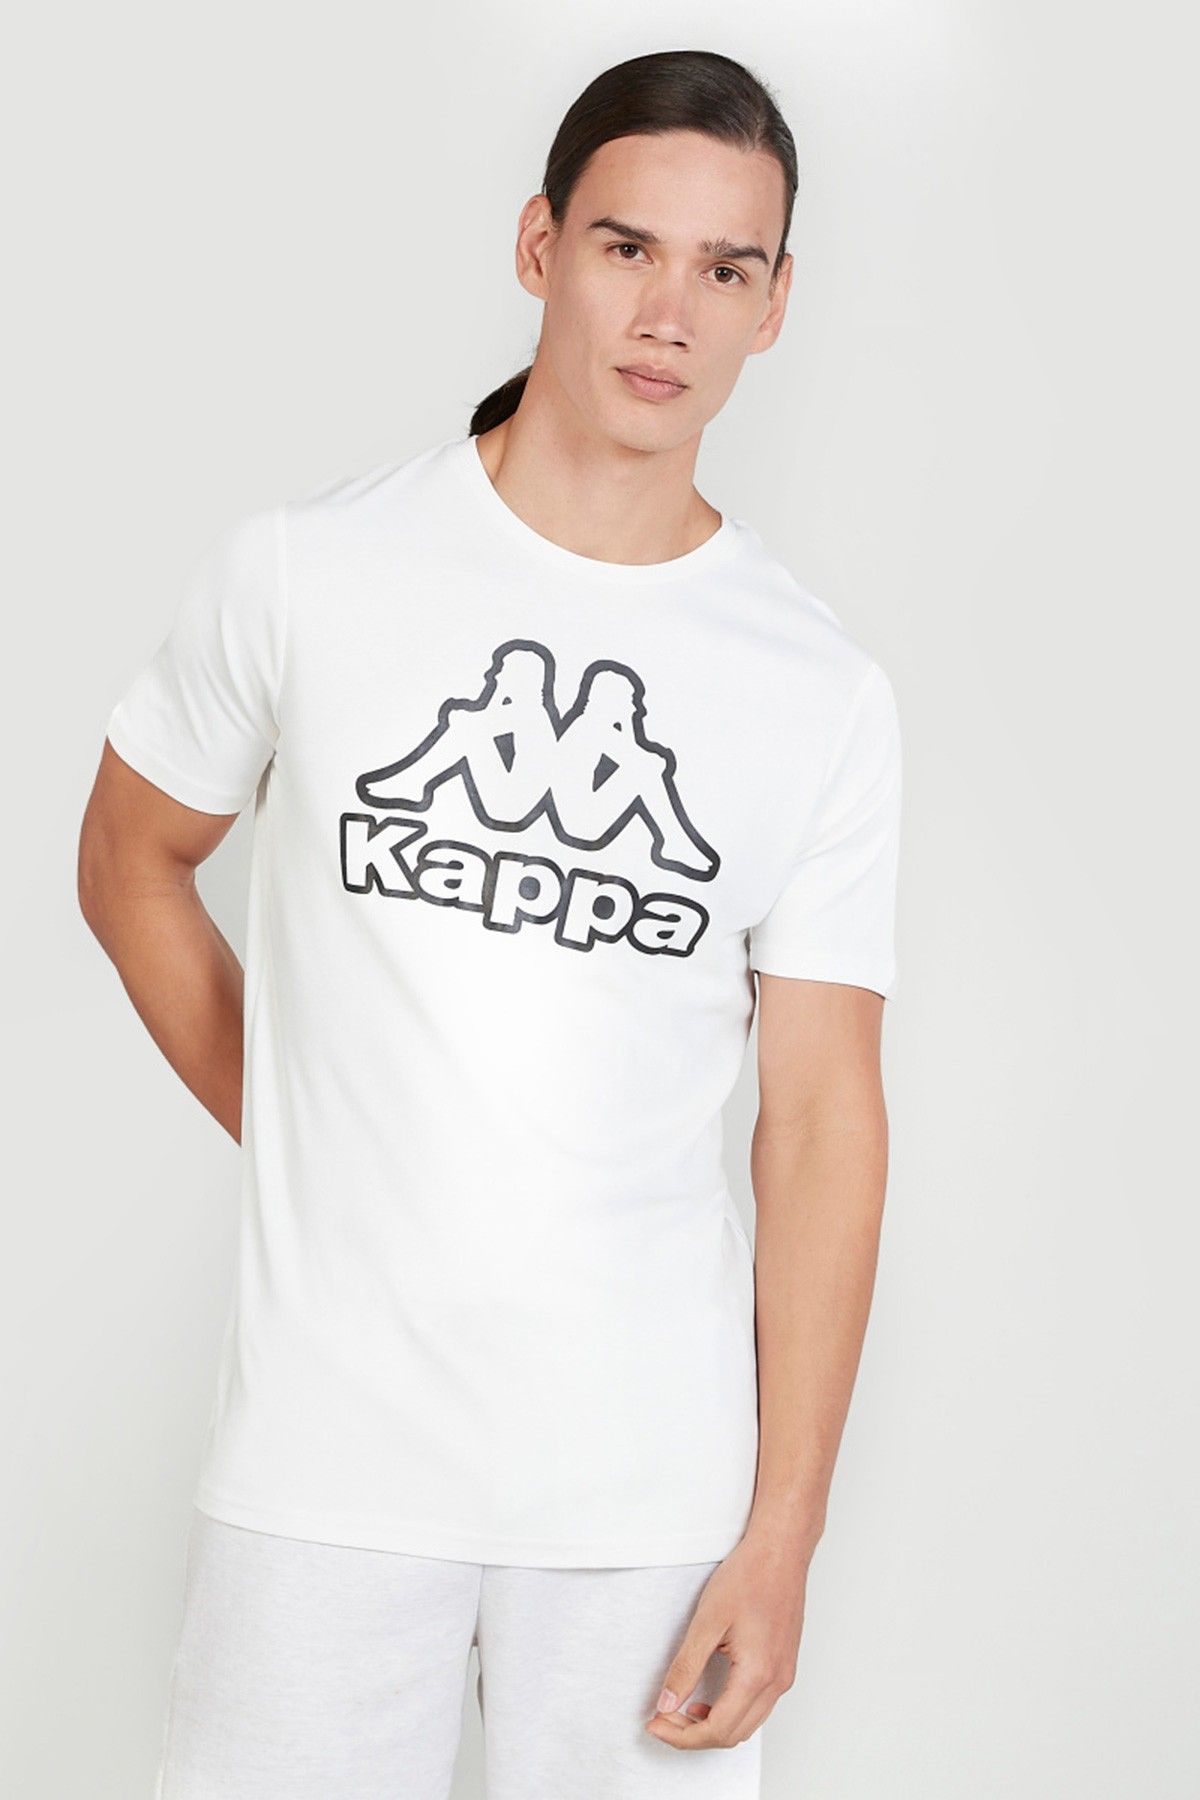 Kappa and with T-shirt Men Printed Sleeves Short T-Shirts Neck Round Splash